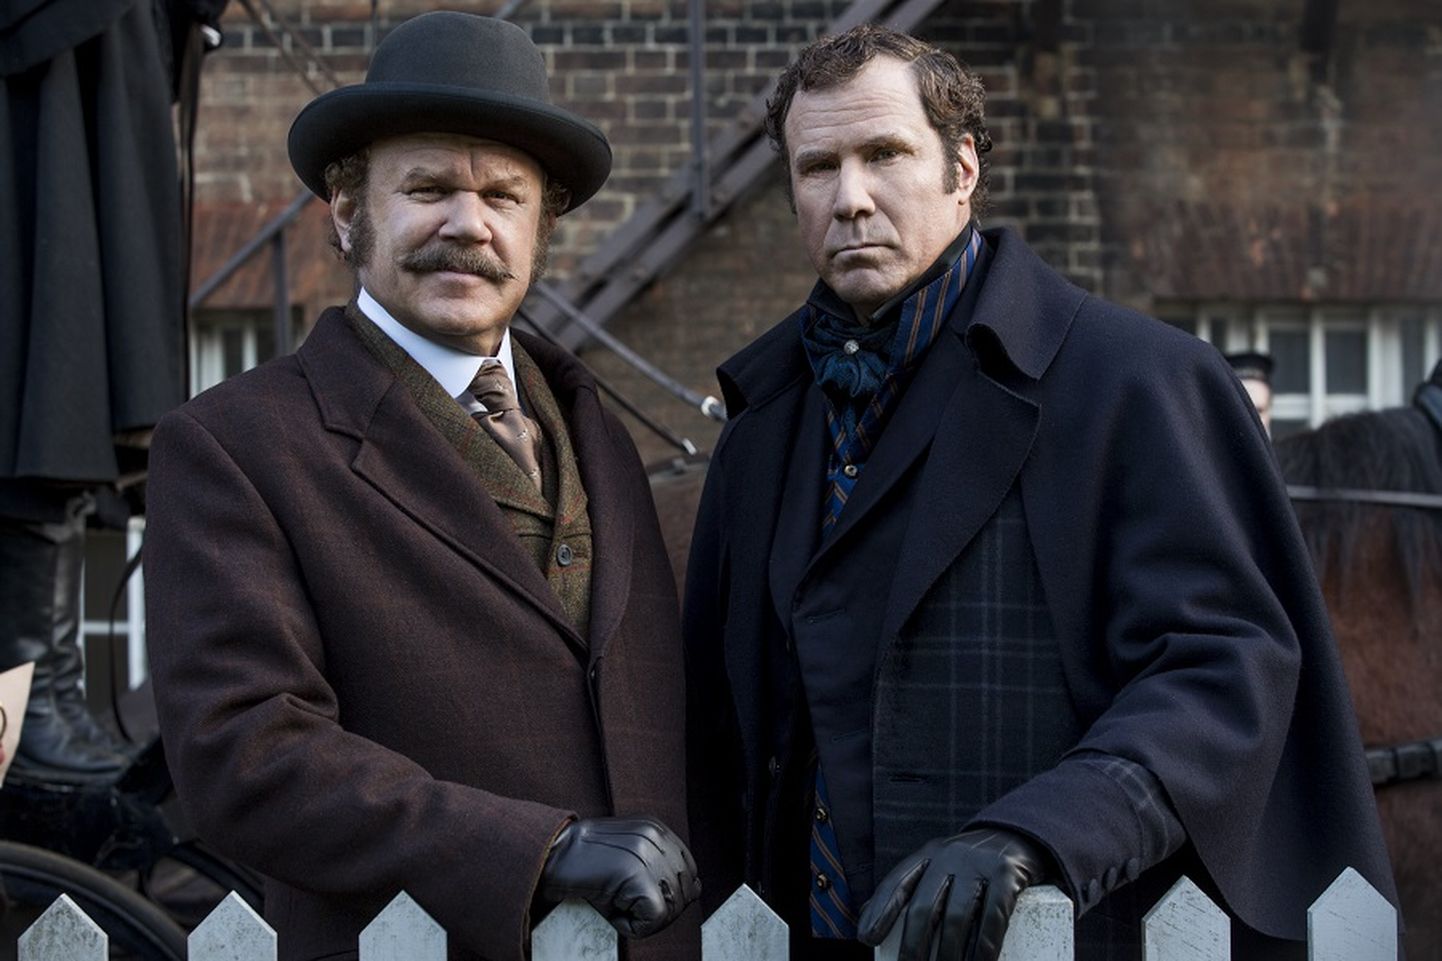 Centrumi kinos linastub komöödia «Holmes ja Watson».